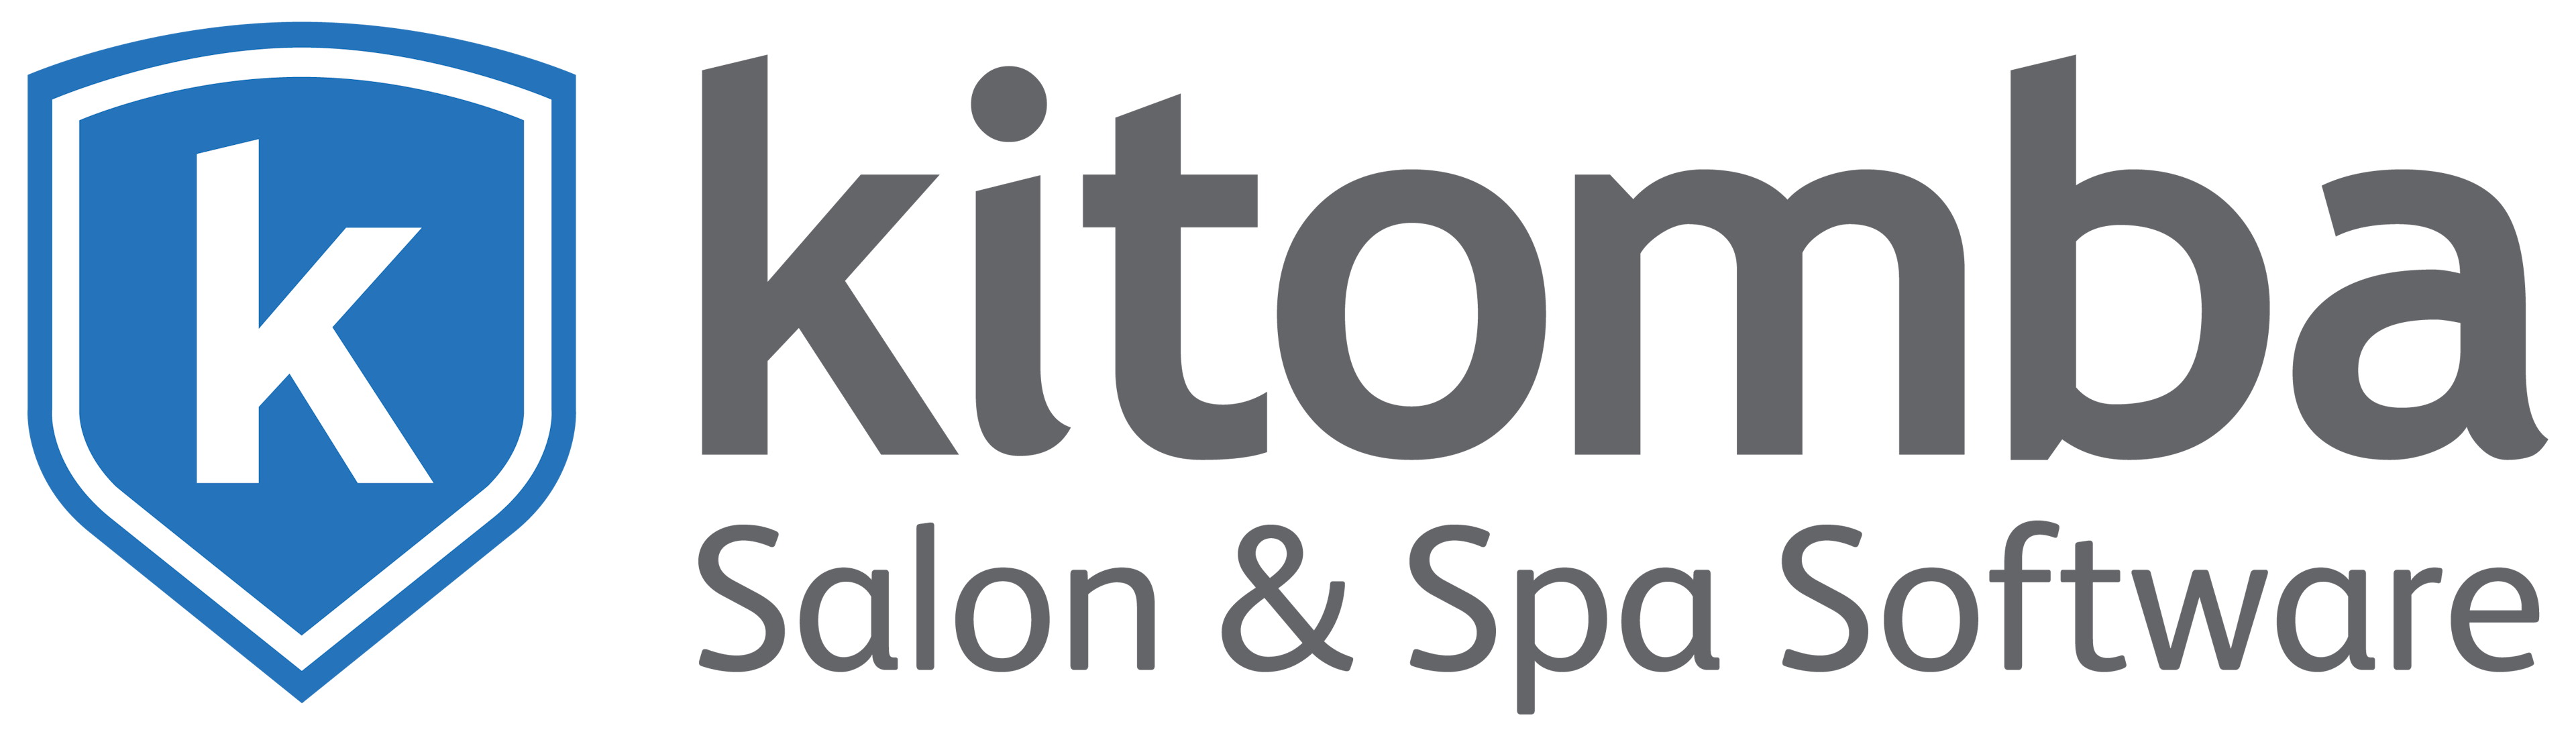 Kitomba Salon and Spa Software Logo